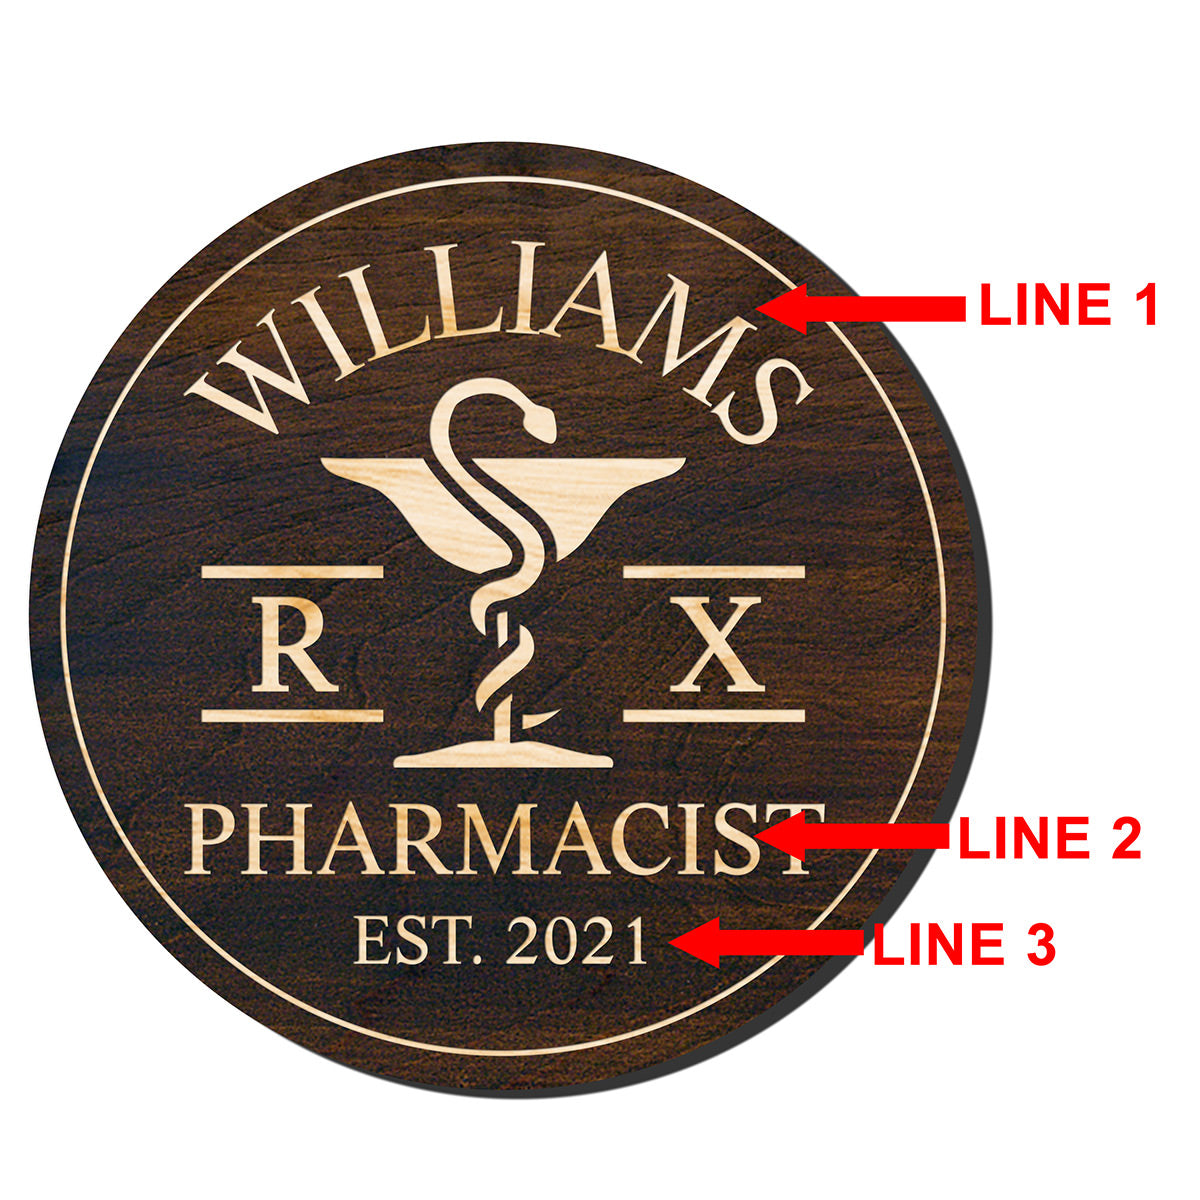 Personalized Pharmacy Sign - Pharmacist Graduation Gift